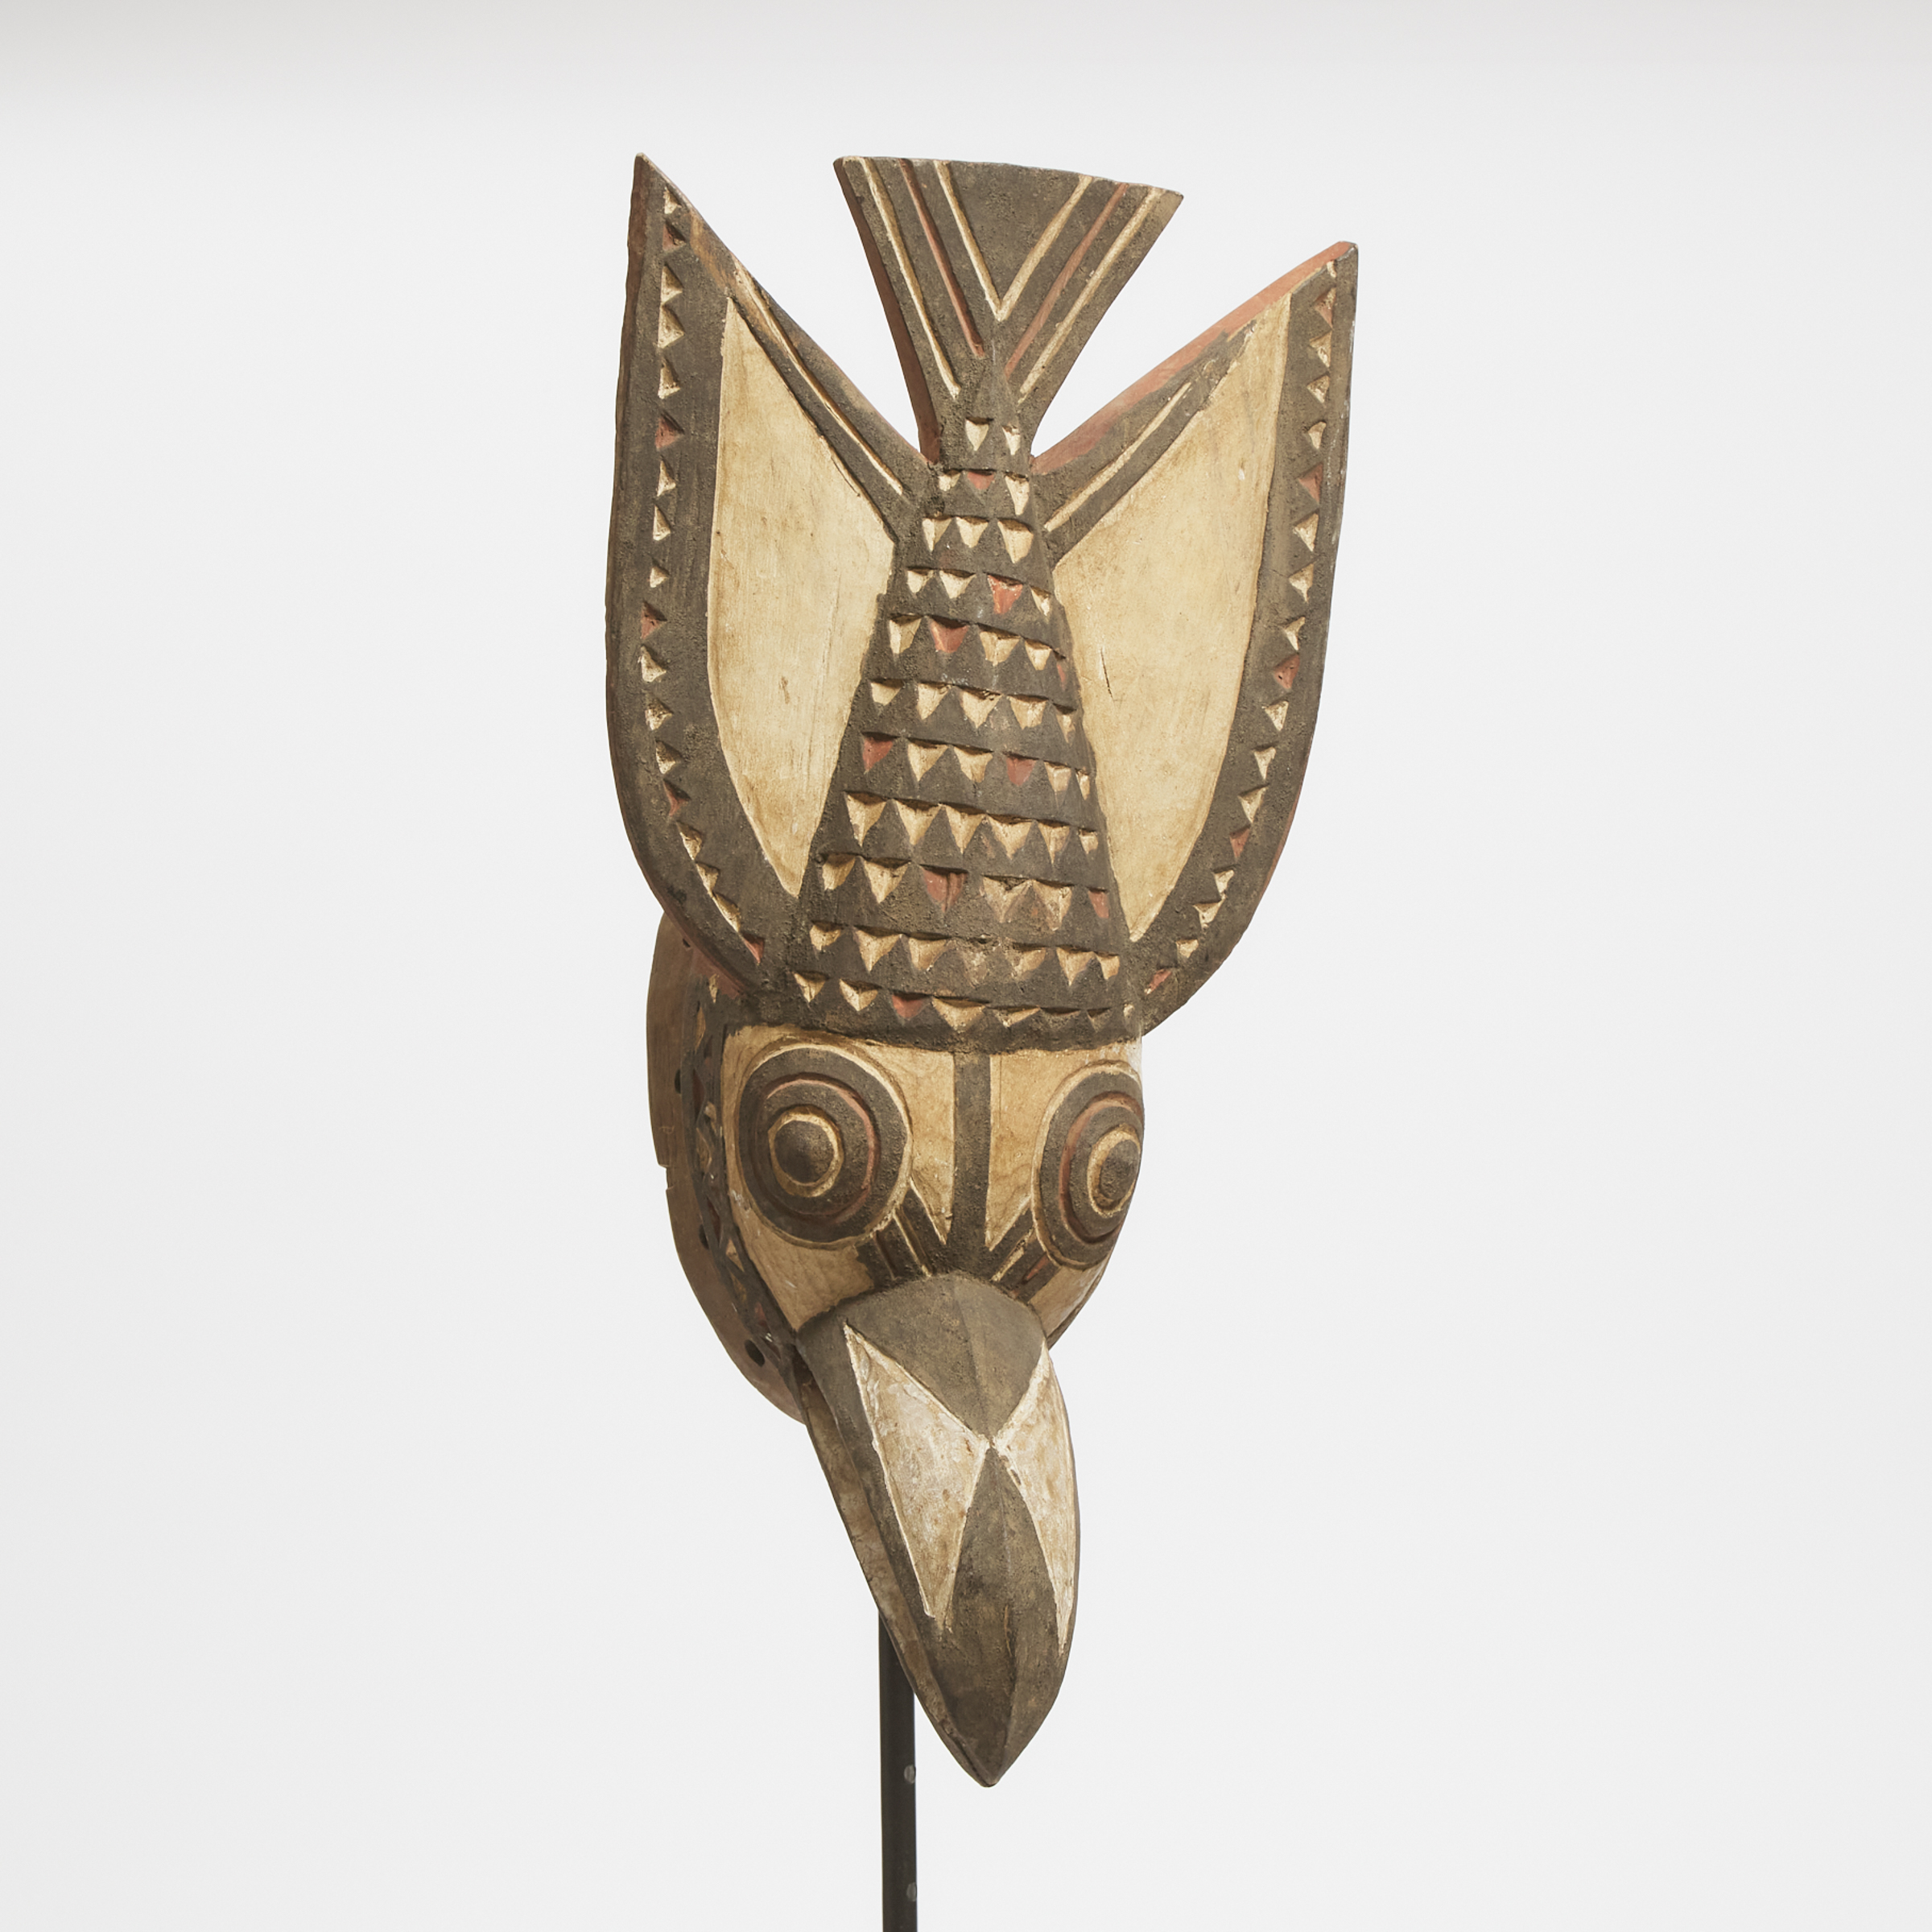 Bobo Bwa Bird Mask, Burkina Faso, West Africa, late 20th century